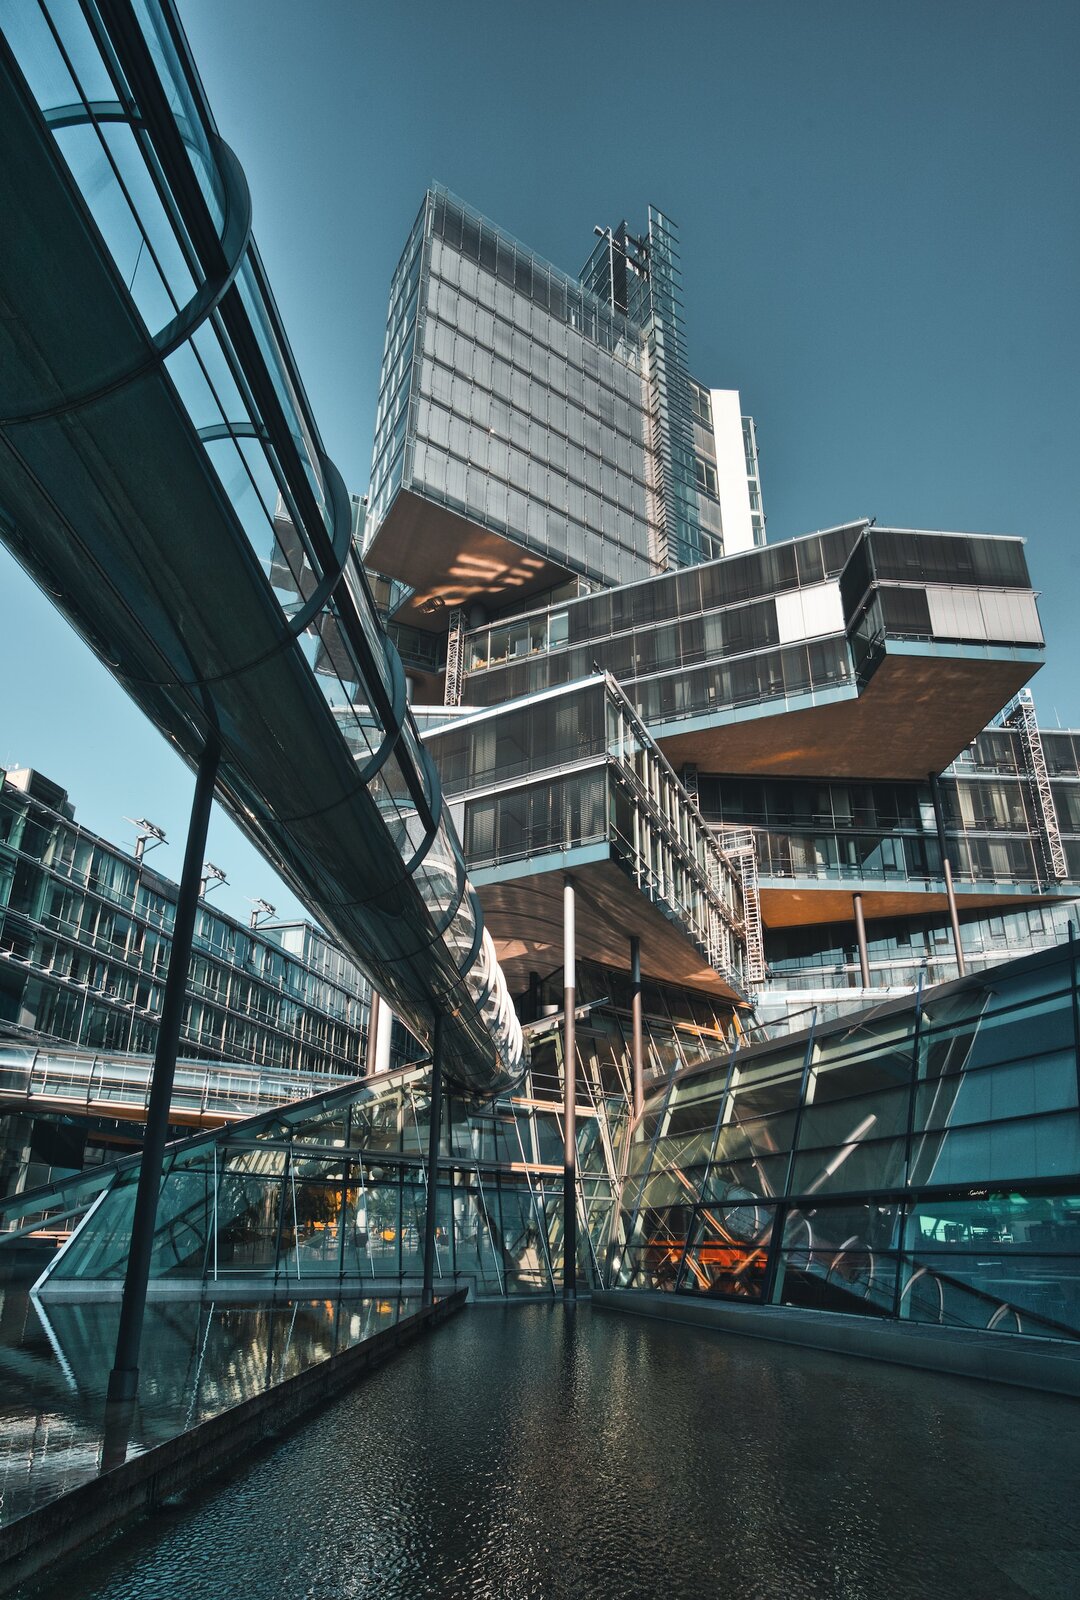 Atemberaubende Architektur in Hannover